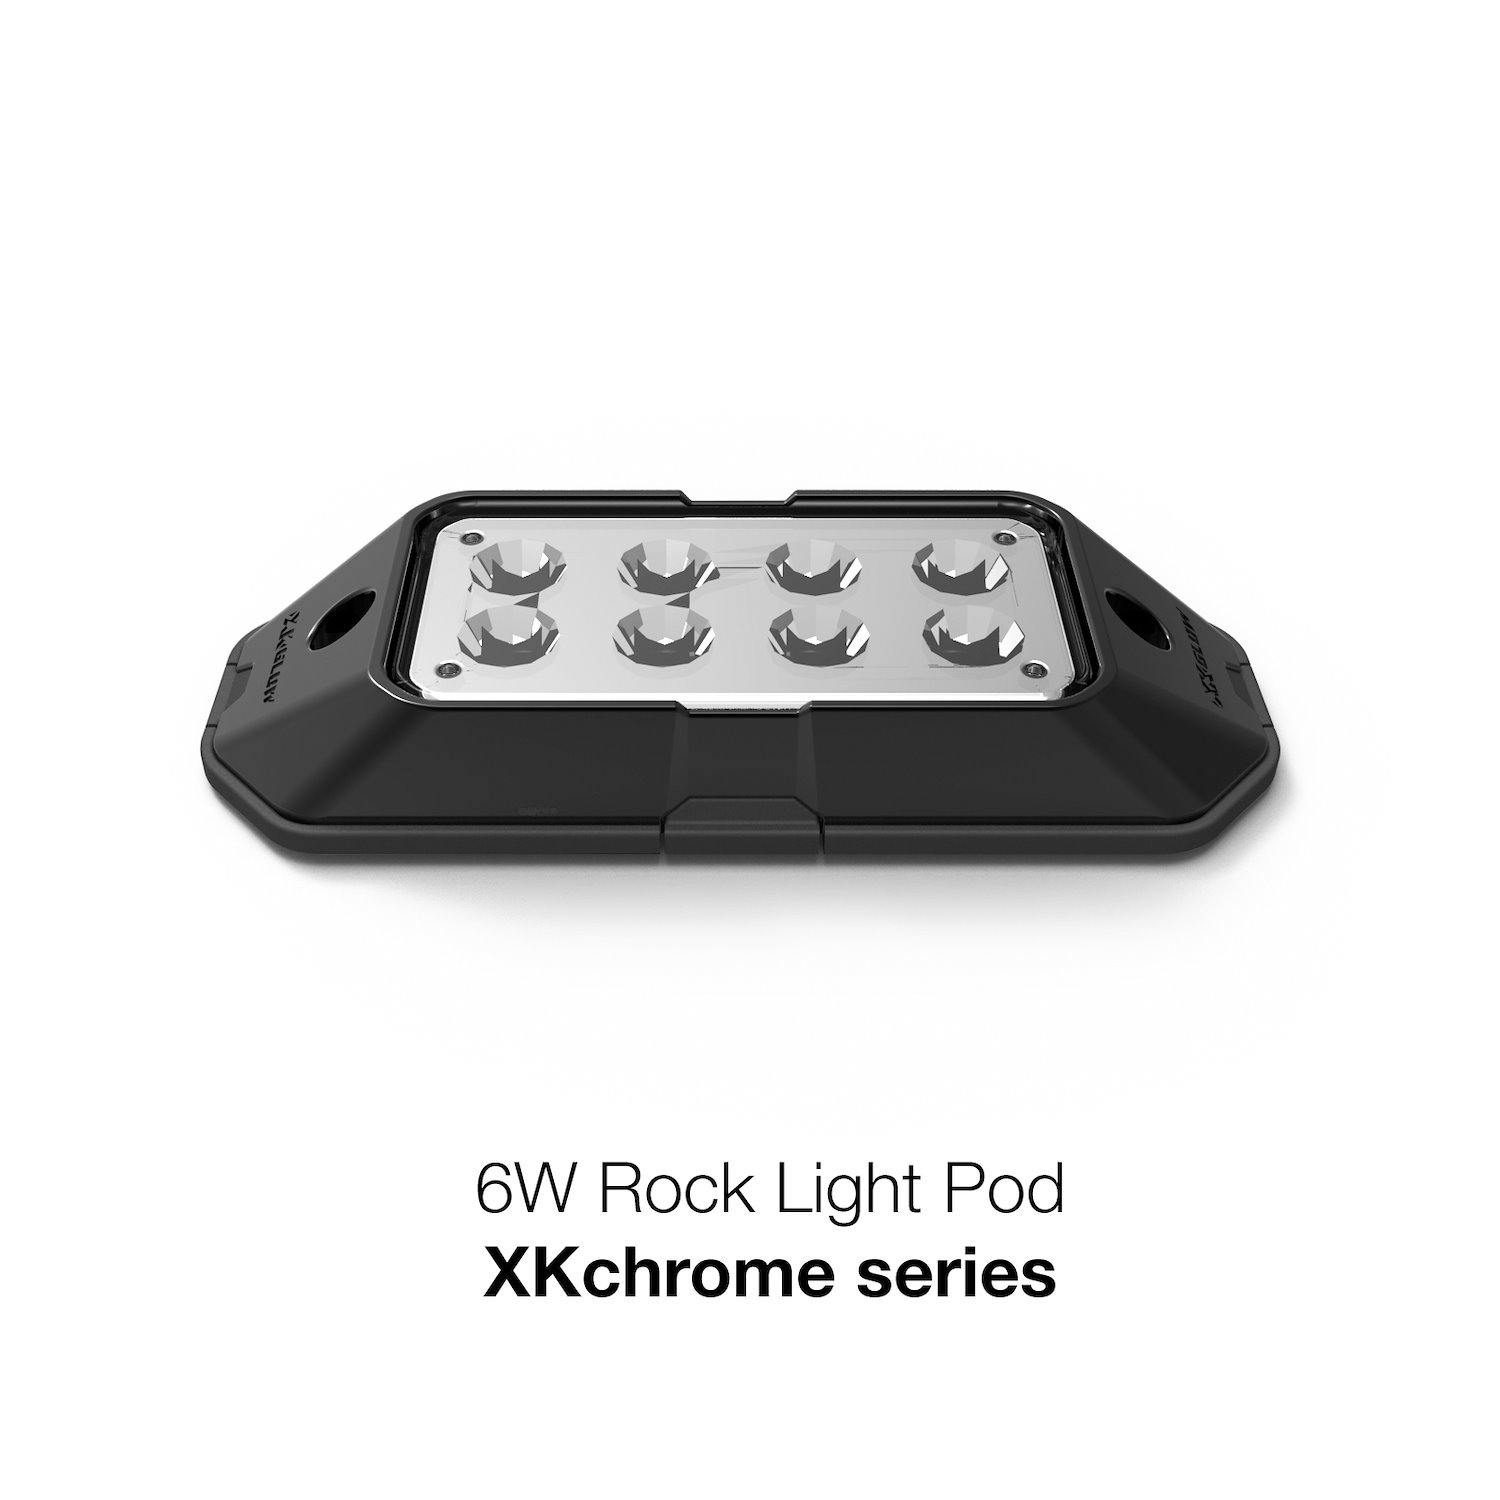 XK-ROCK XKCHROME Low-Profile Ultra Bright Rock Light Pod, 6 Watt, Universal Fit